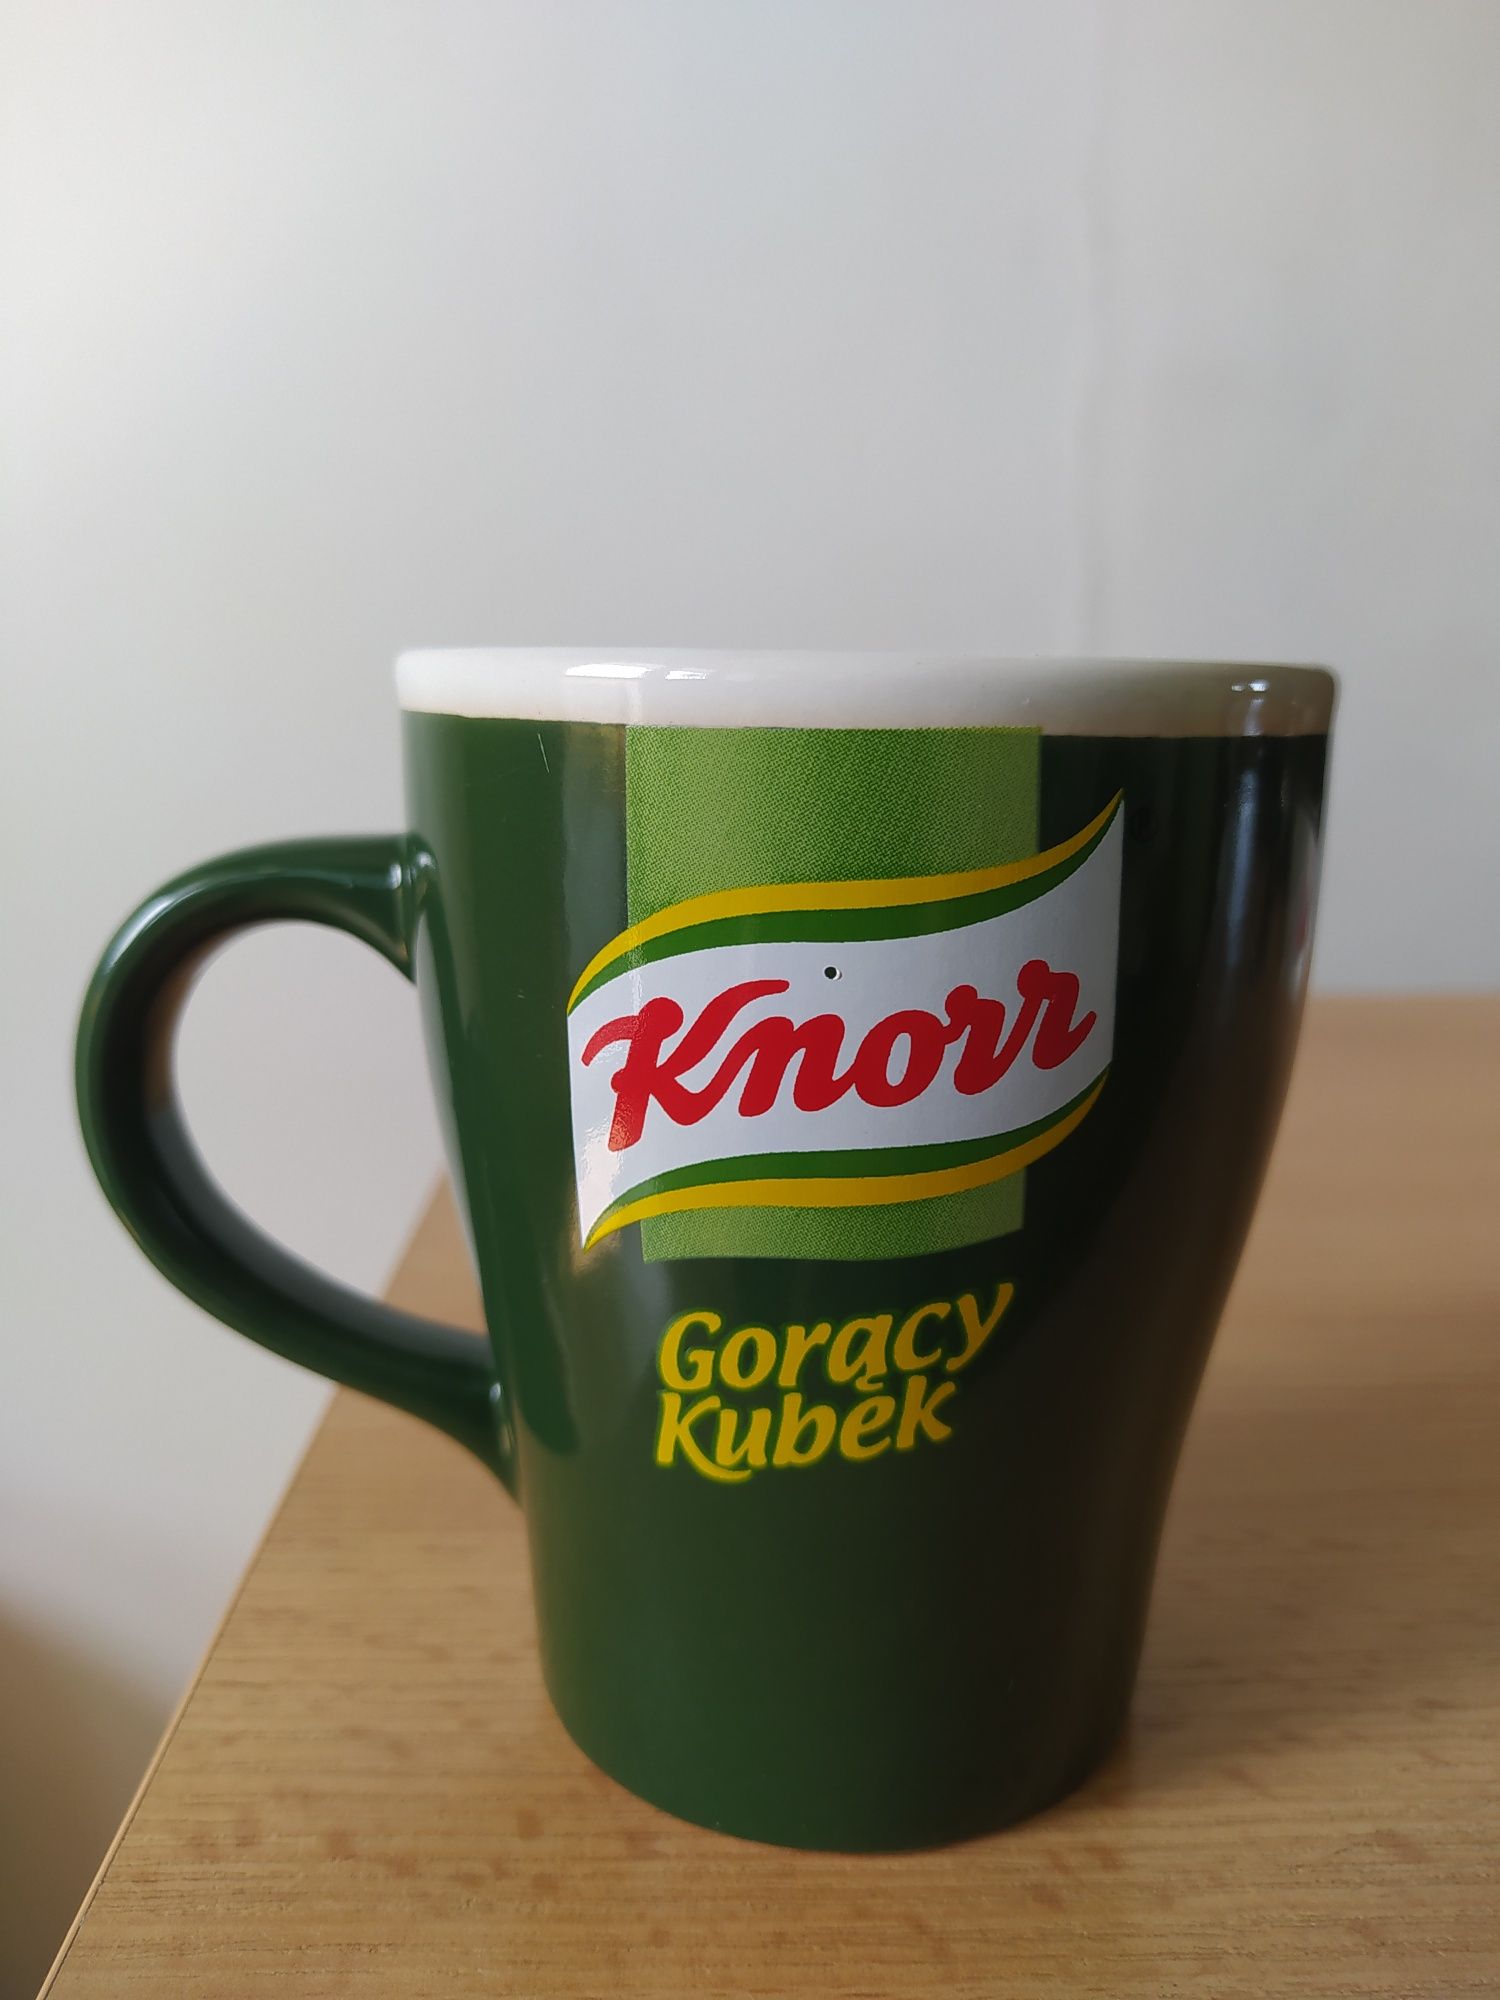 Kubek Knorr z napisem